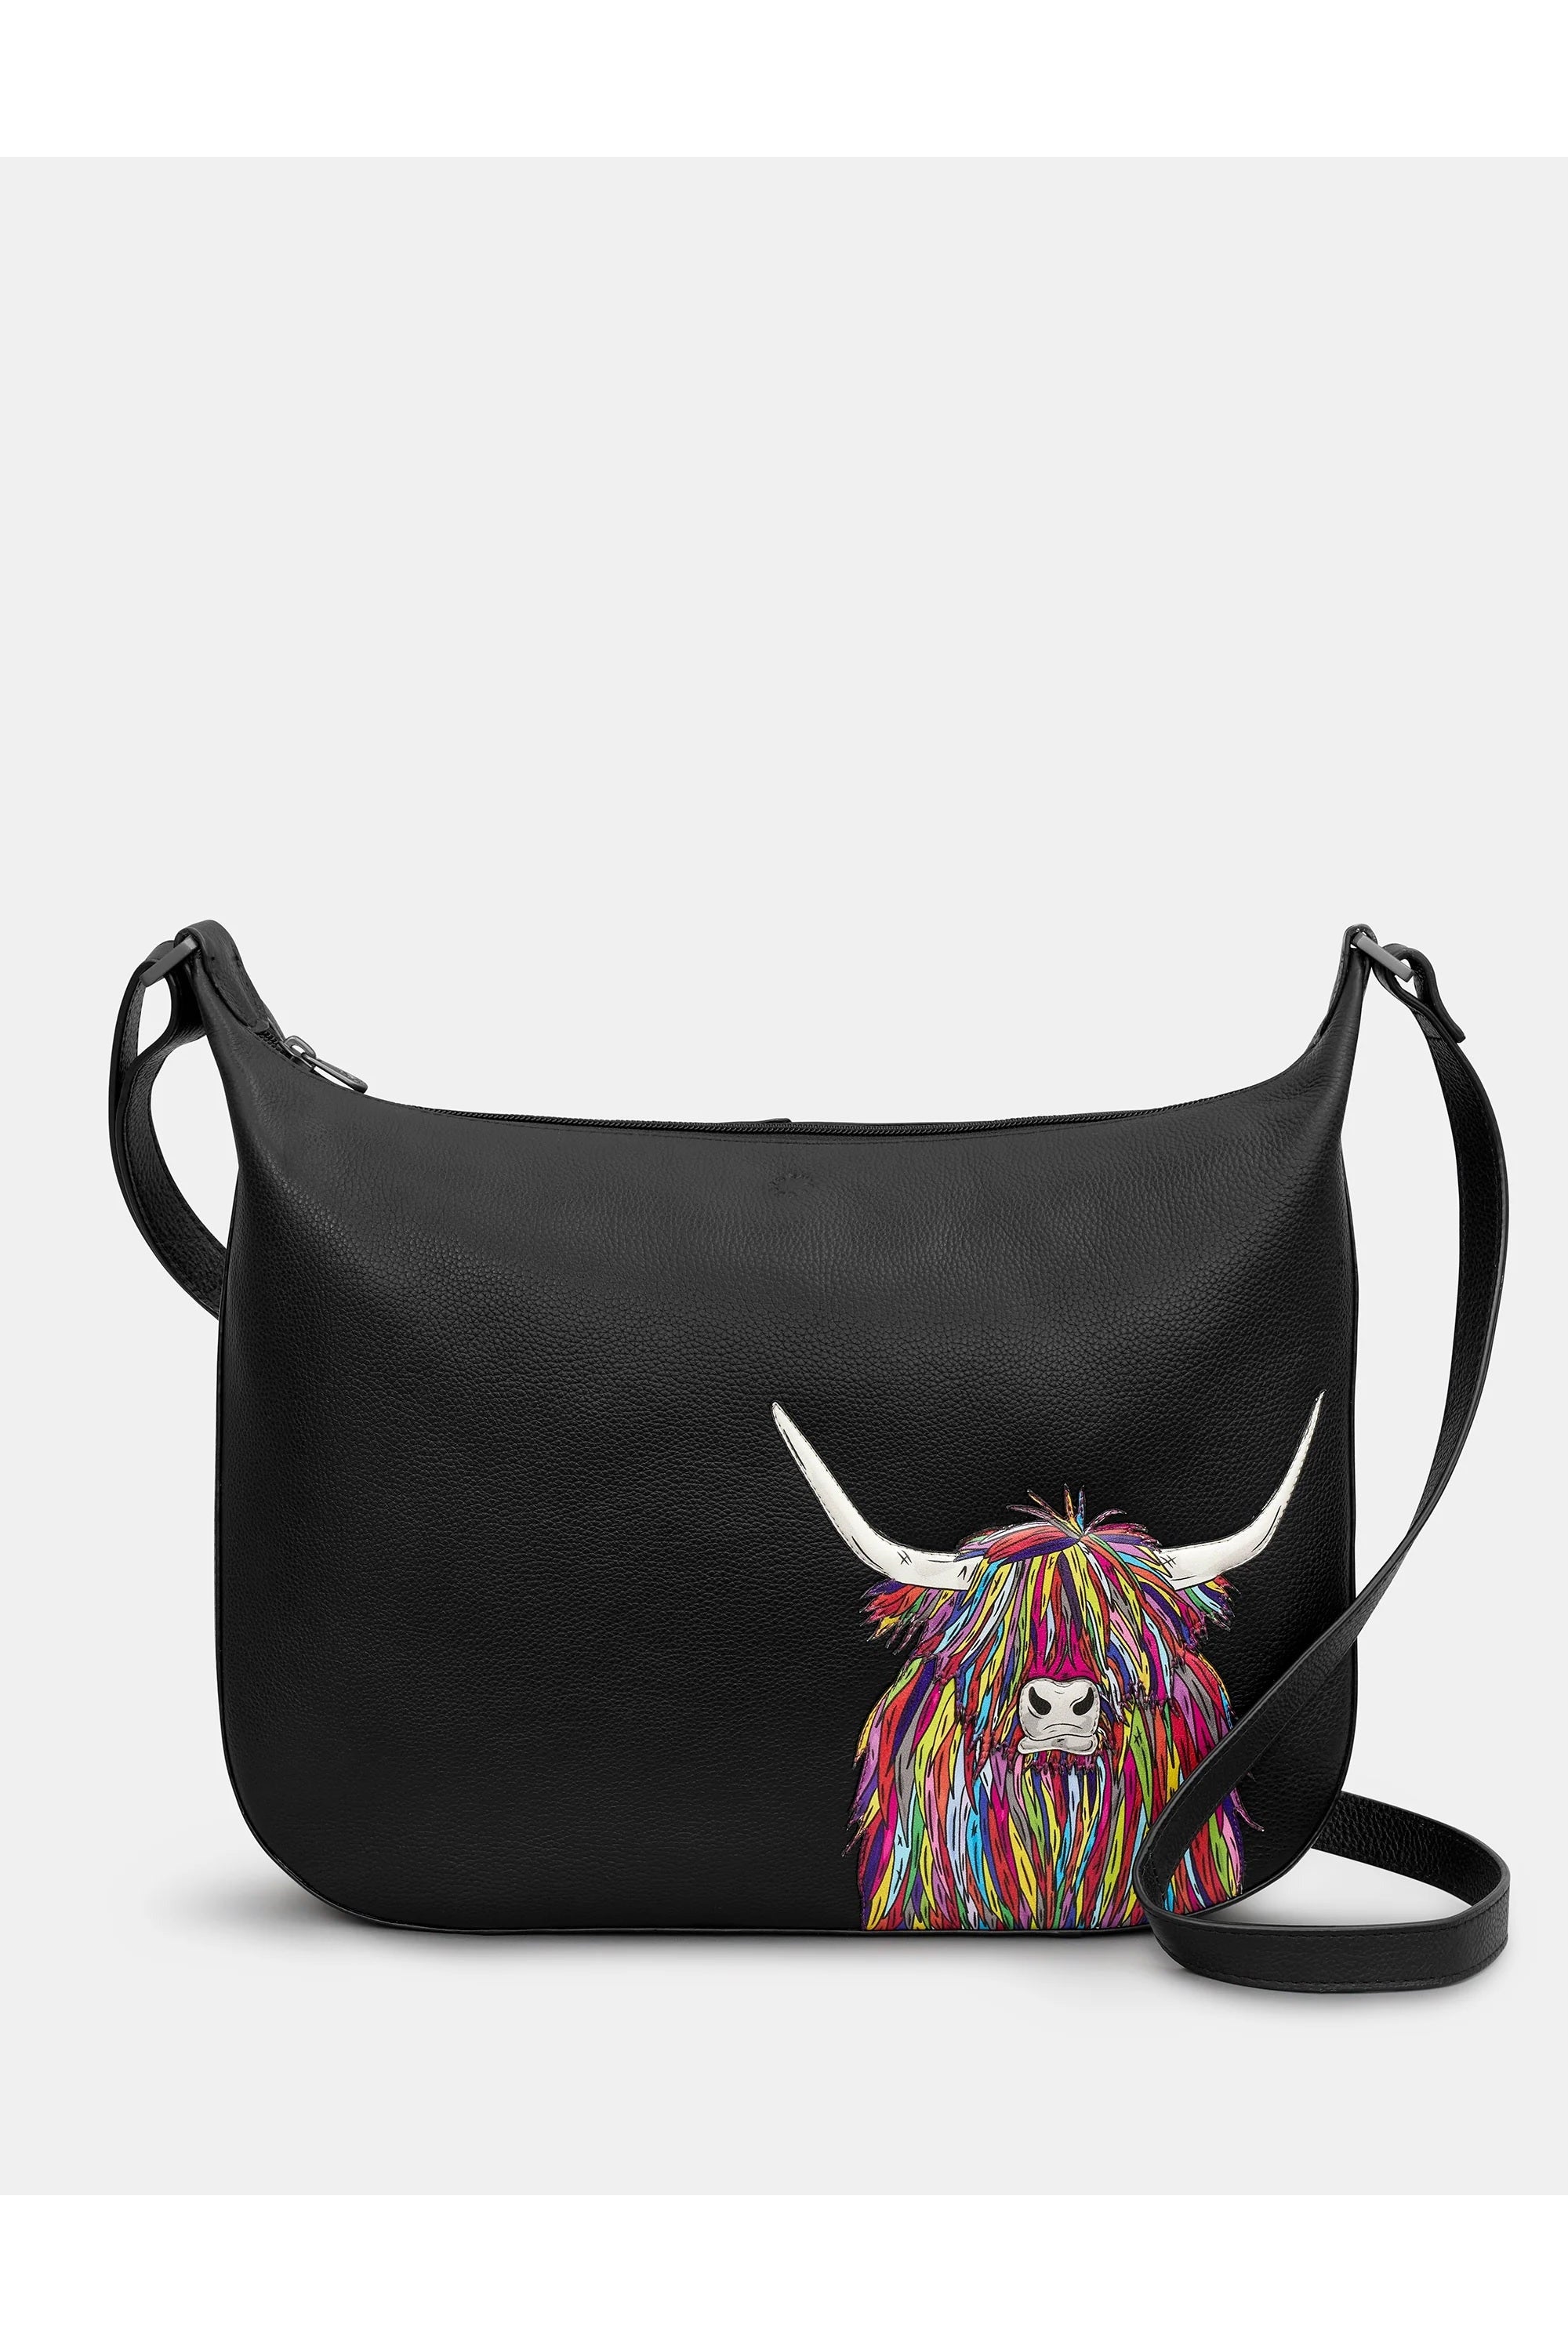 Yoshi Handbags Rainbow Cow Hobo bag